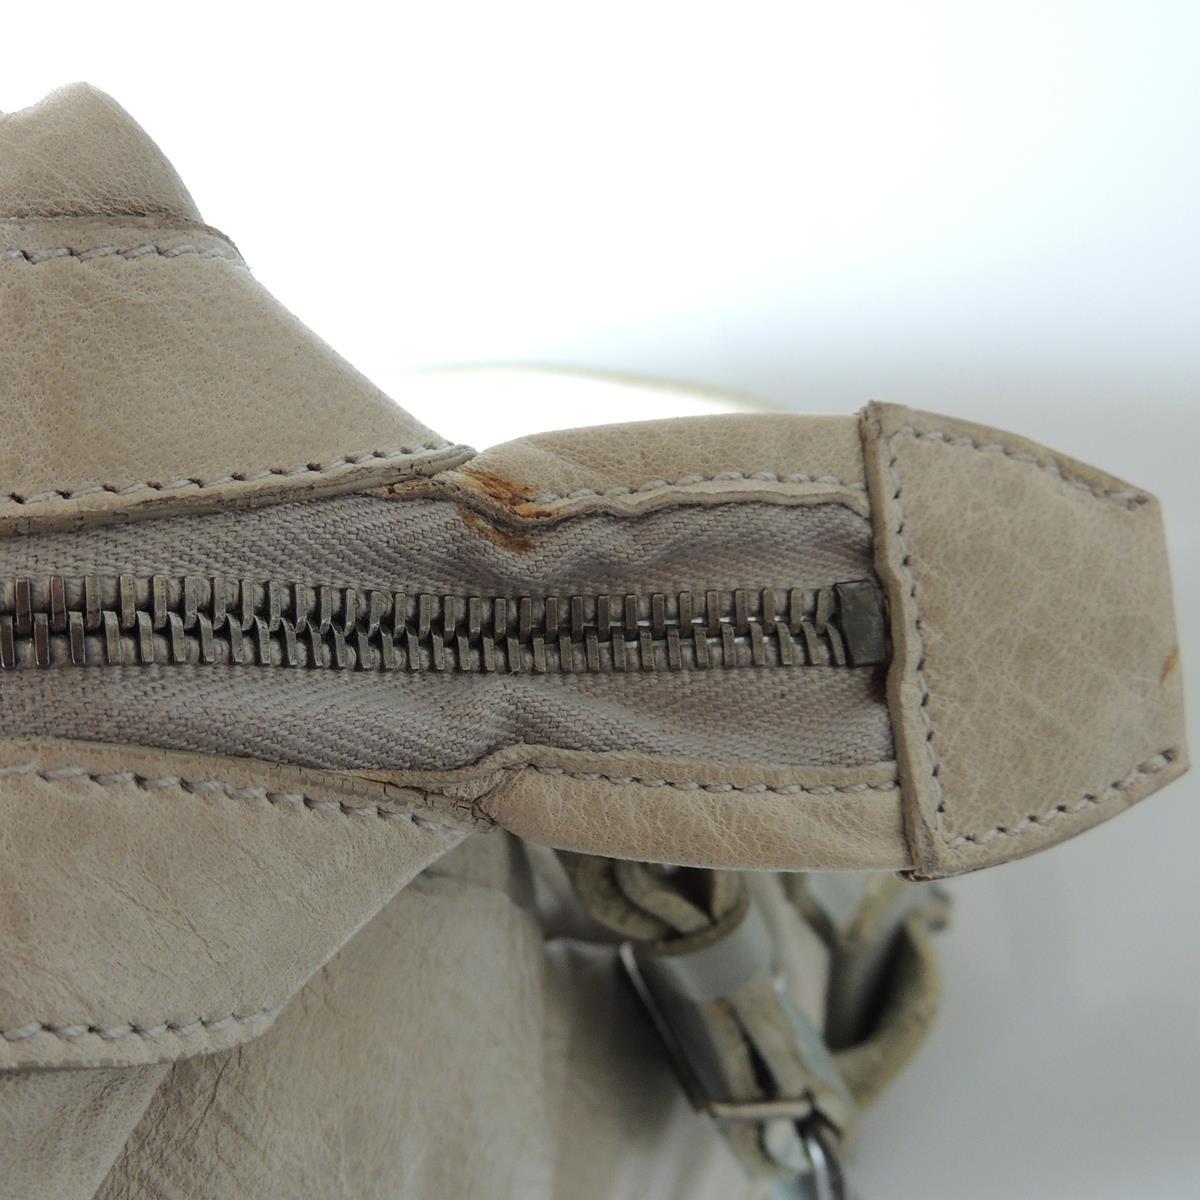 Balenciaga Crossbody Bag In Good Condition For Sale In Gazzaniga (BG), IT